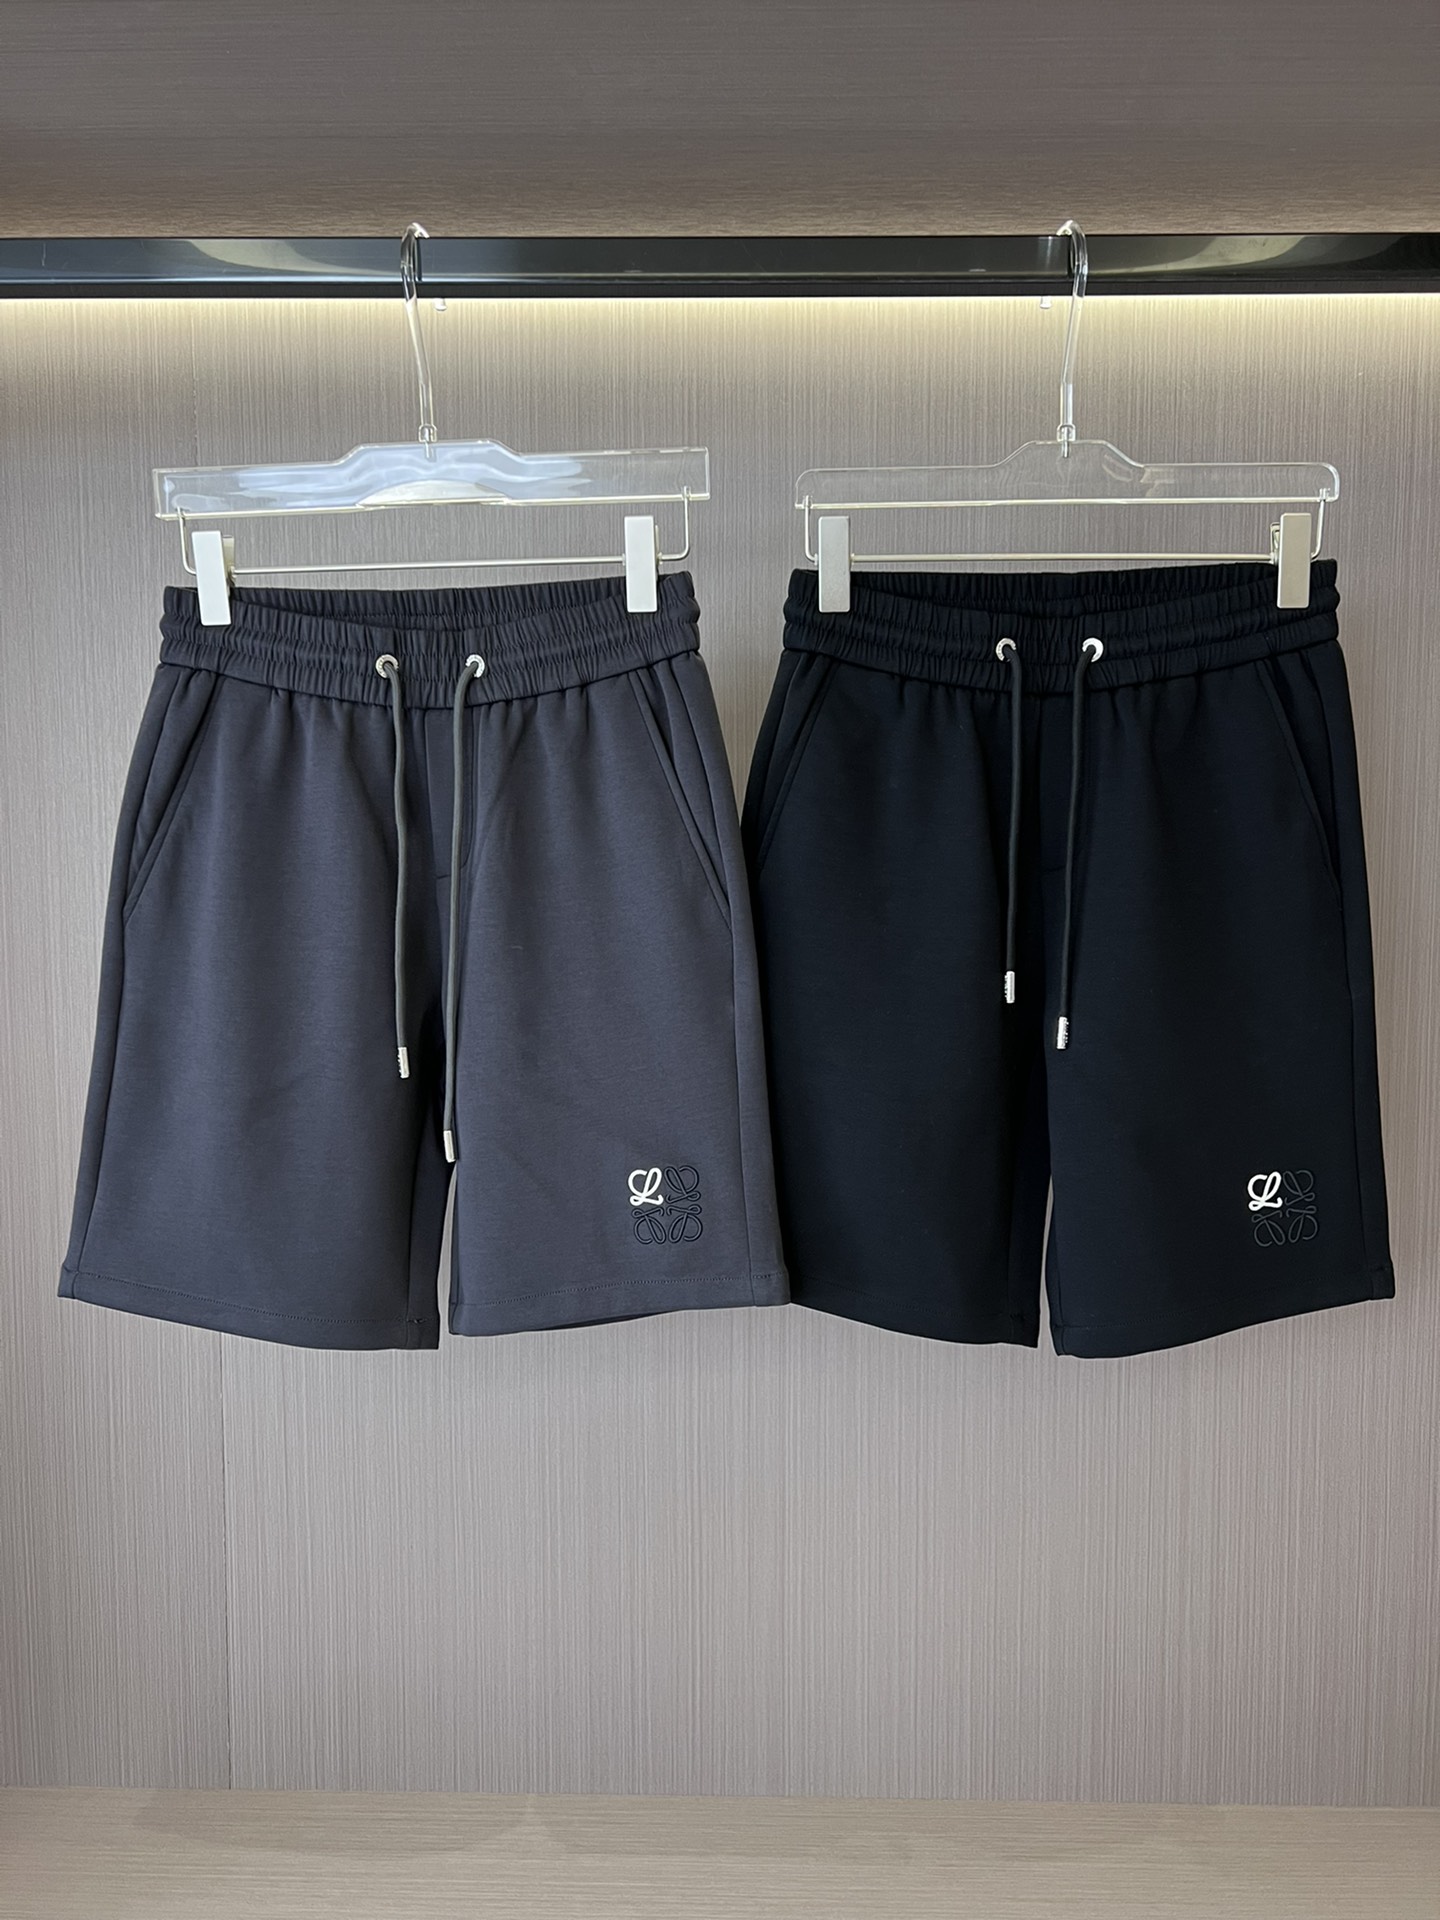 Pzwdqq//loewe 春夏新款短裤 精选A00%棉纱，多重功能处理后呈现丝光色泽与舒适弹力性穿着更舒适透气。立体剪裁，更舒适宽松，体味炎夏自如轻松 ！                            颜色：黑色，灰色尺码：M-3XL